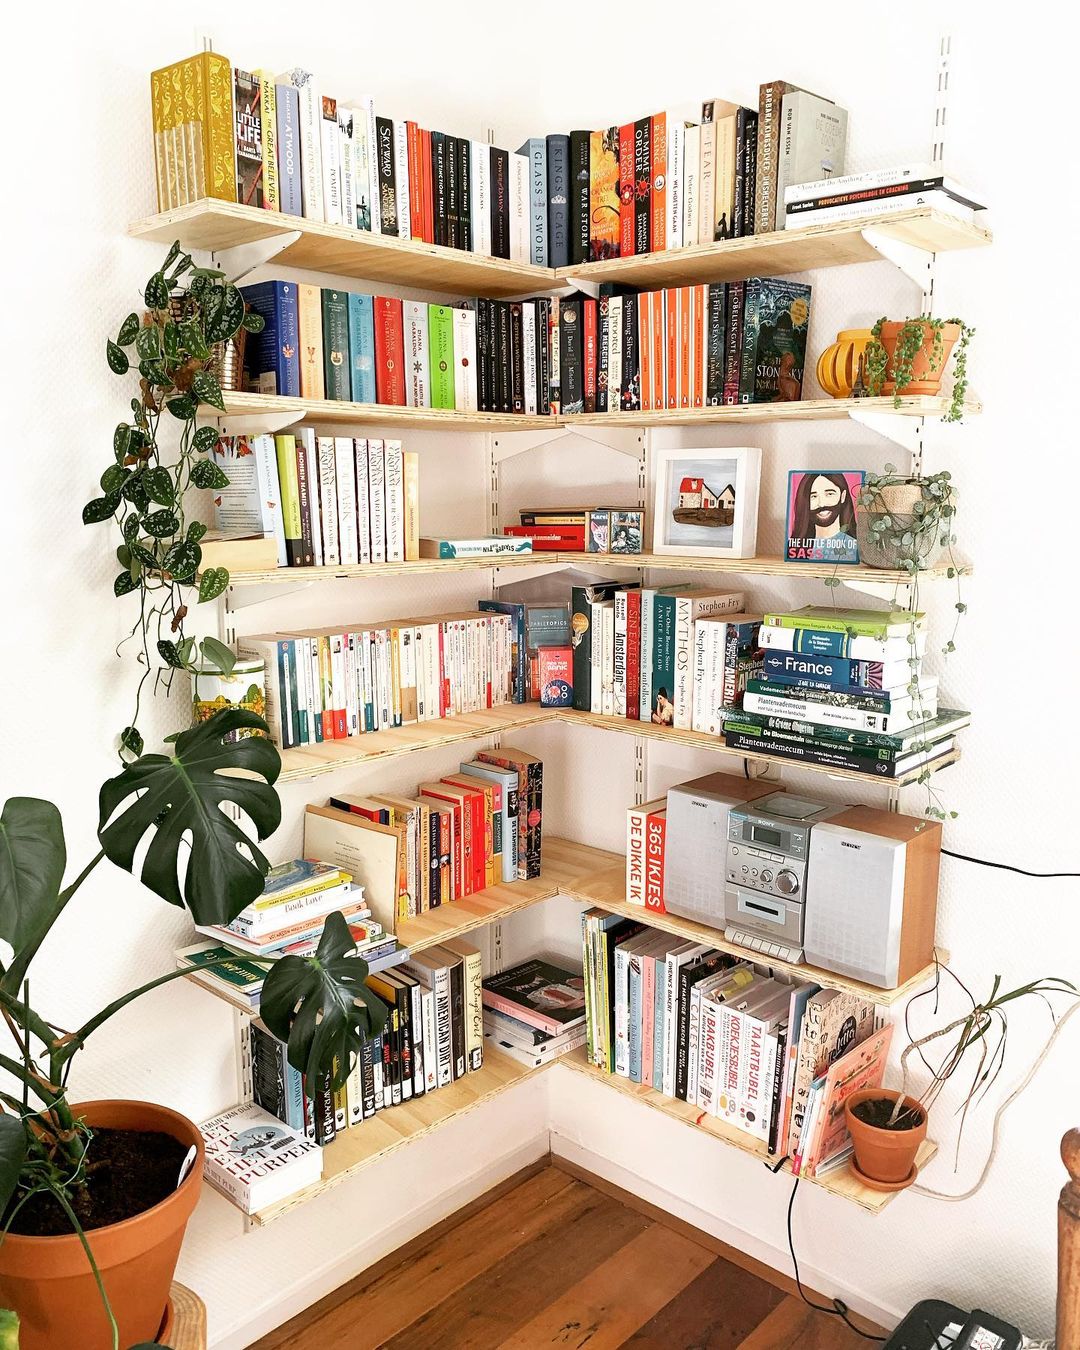 Corner Storage Area for Books. Photo by Instagram user @lettersvanlia